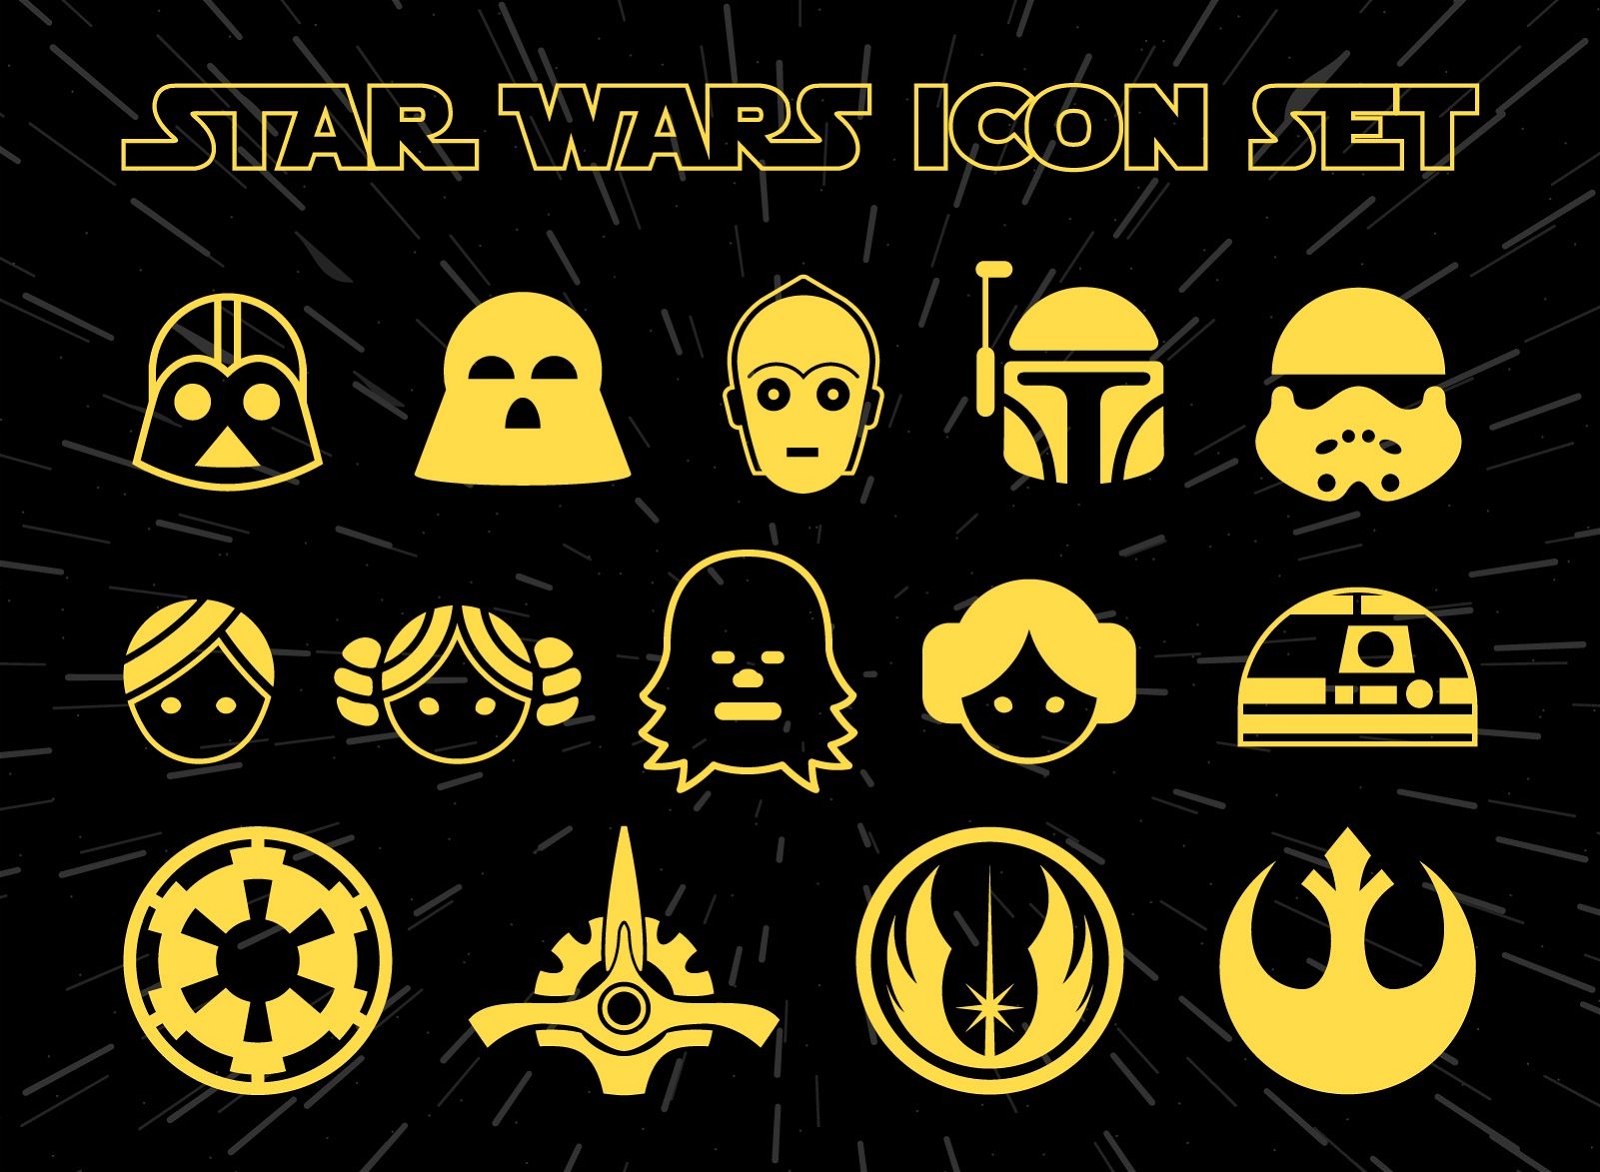 Star Wars icon set